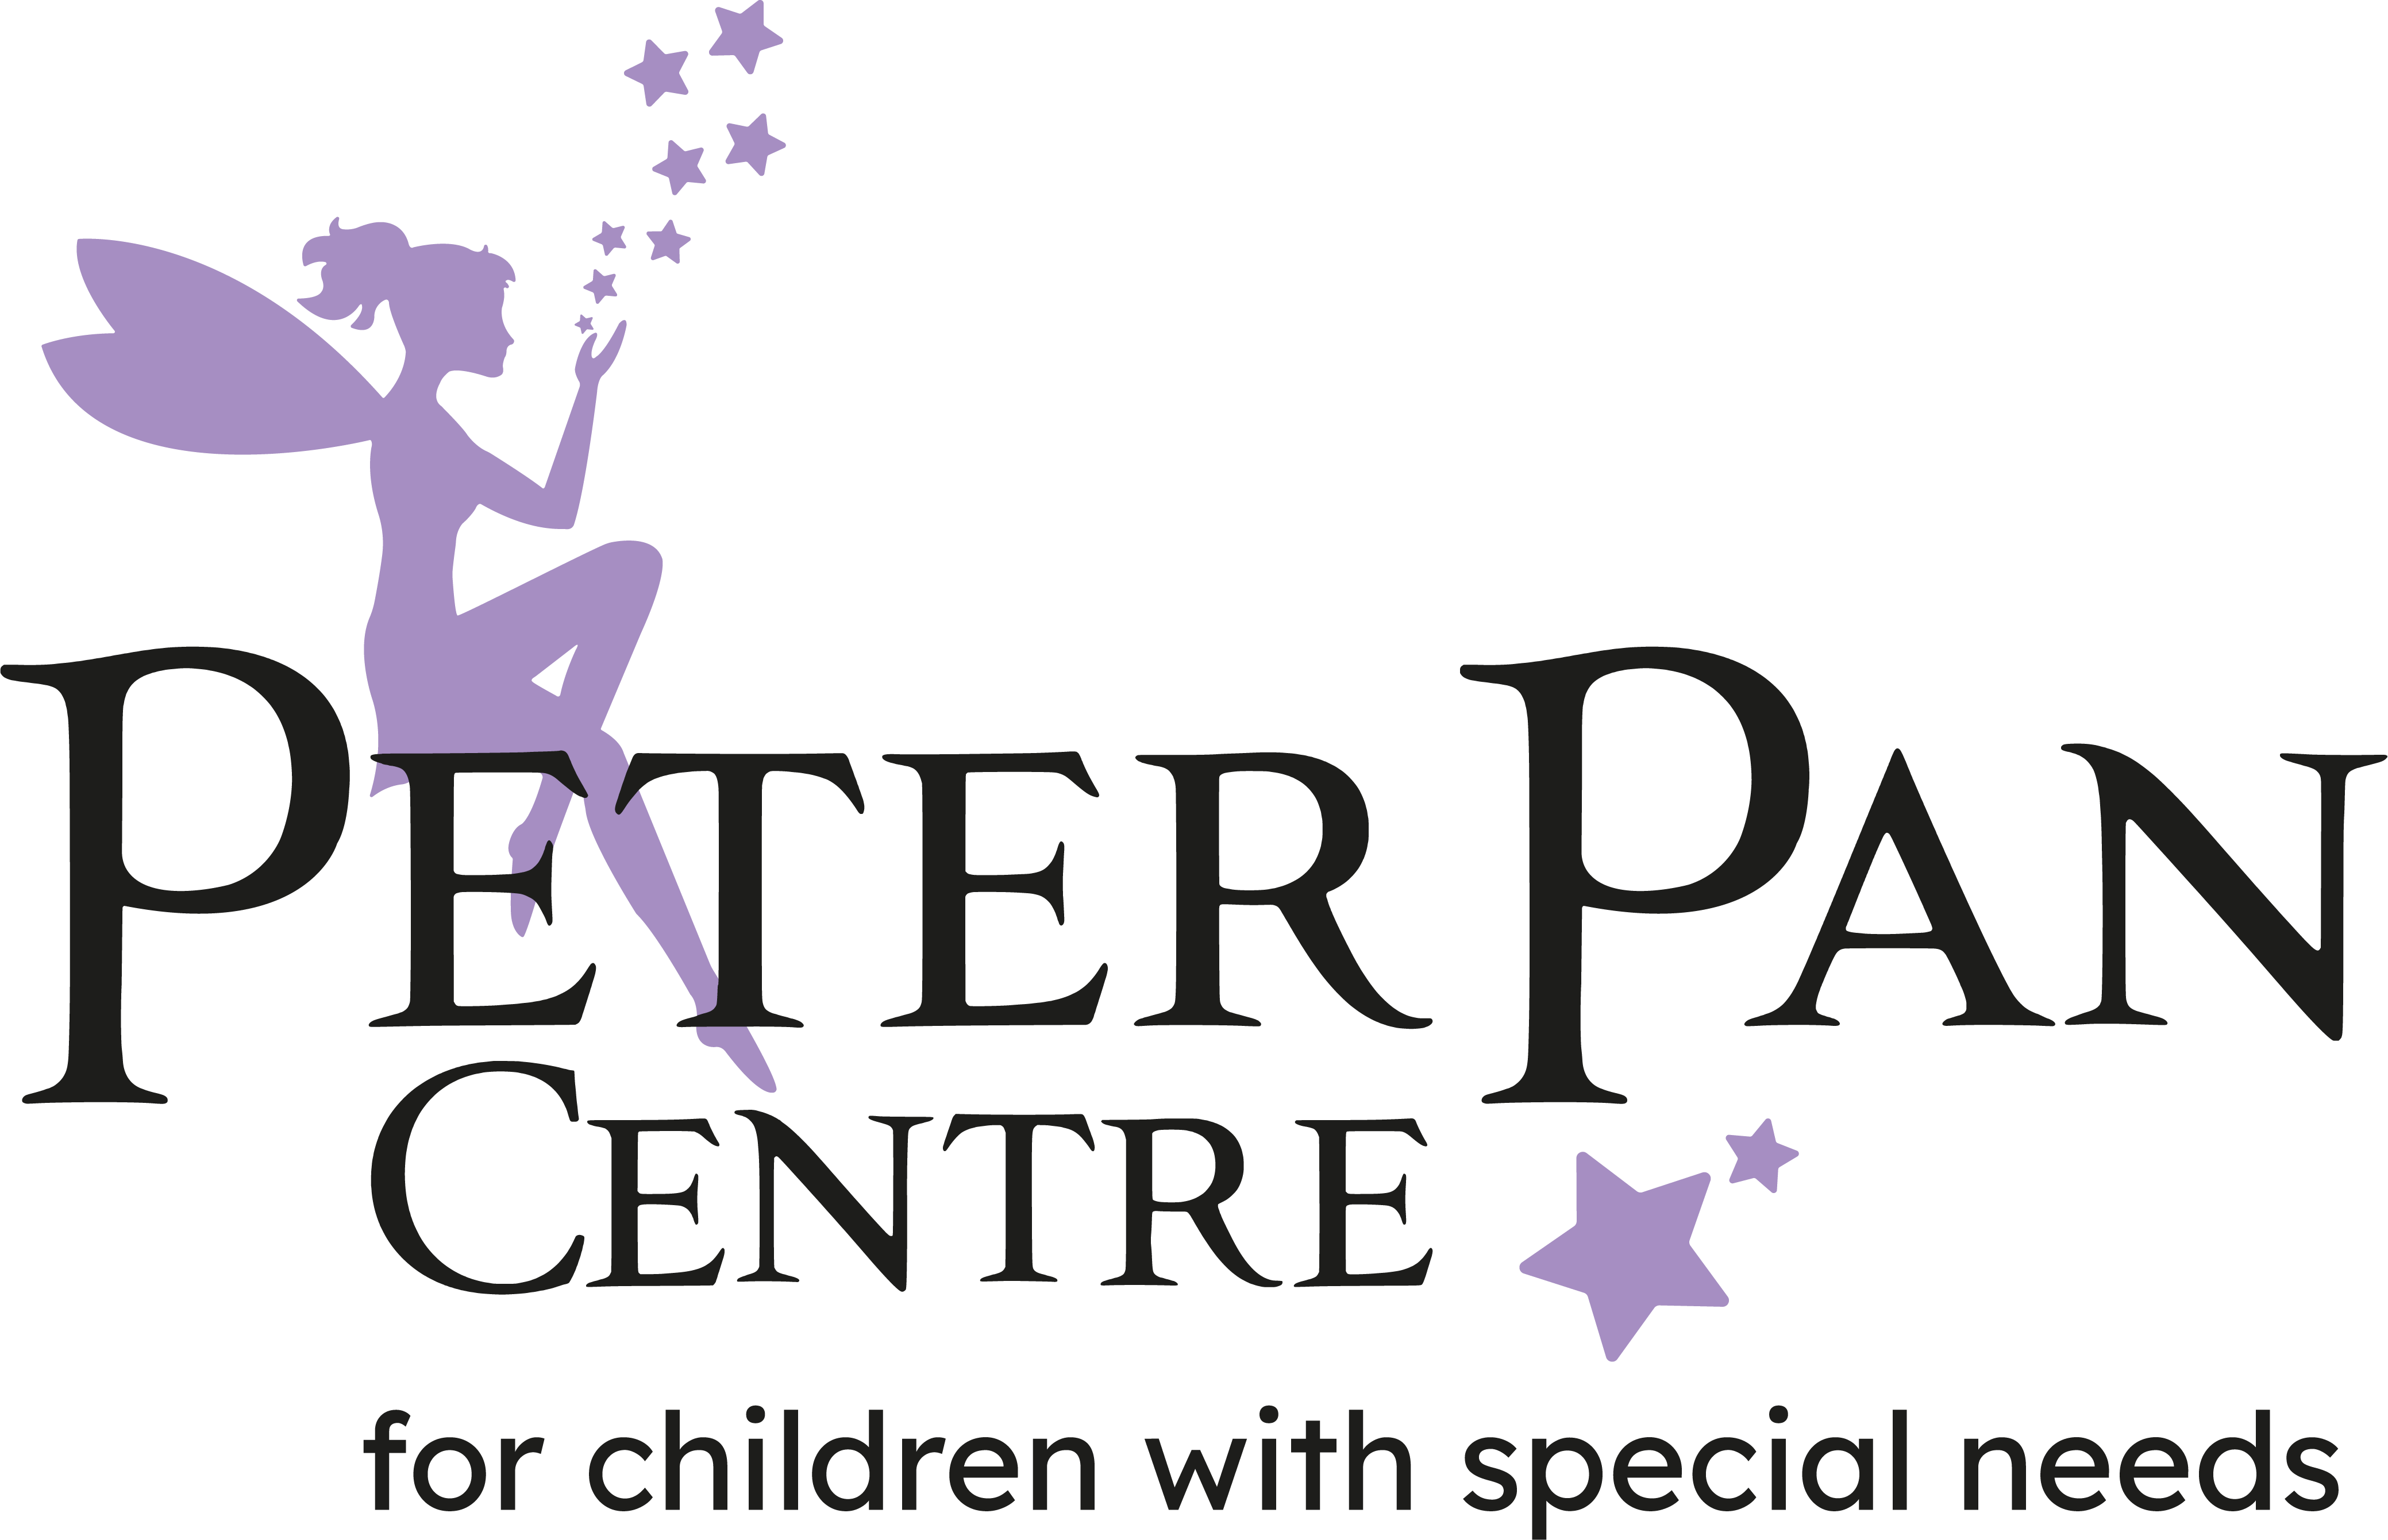 The Peter Pan Centre